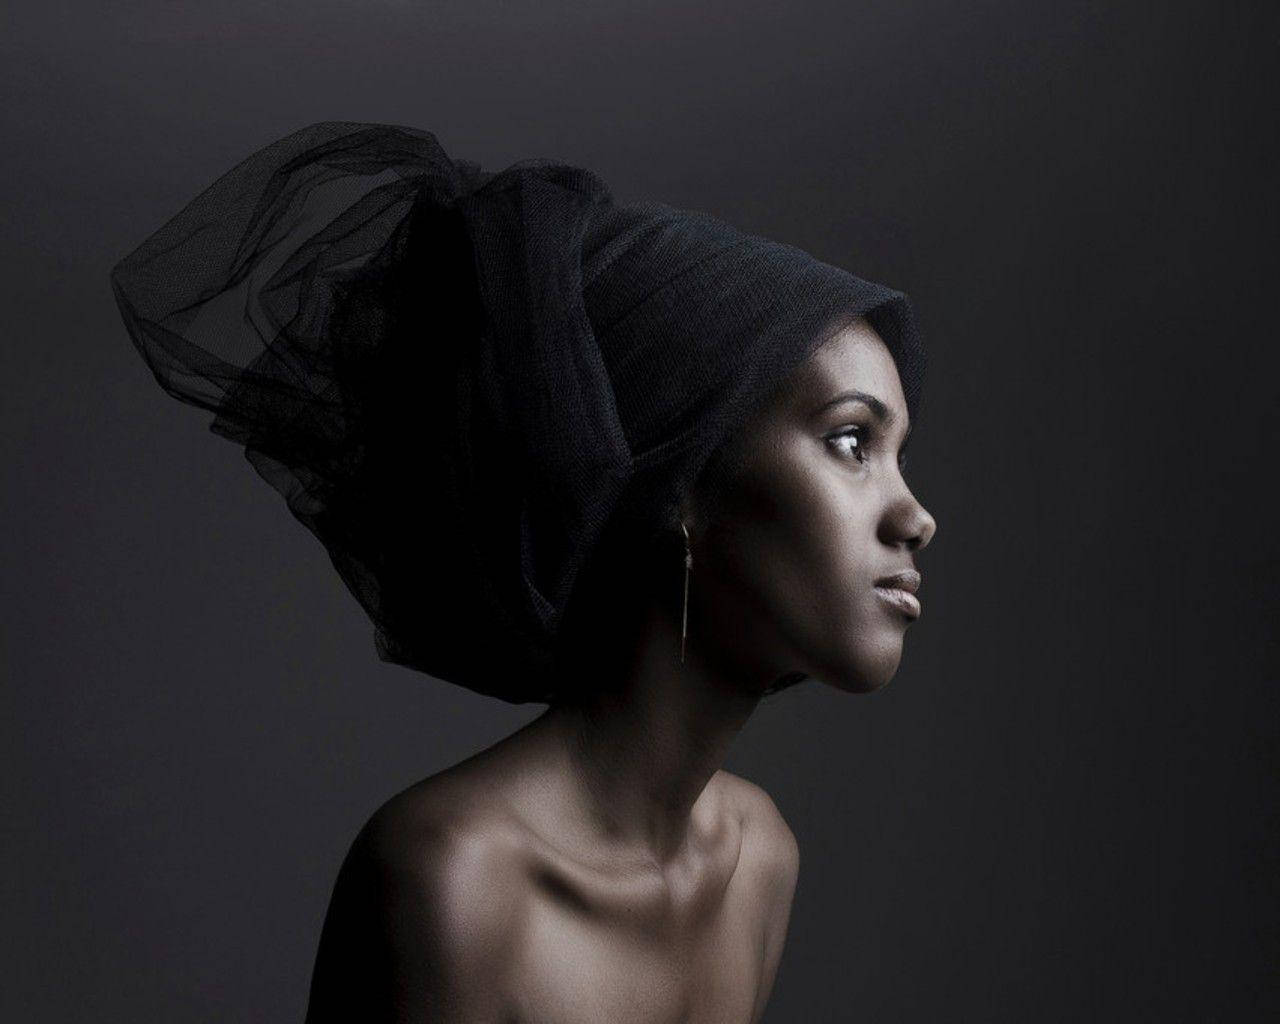 Girl With Black Headwrap Portrays Sexy Black Women Wallpaper